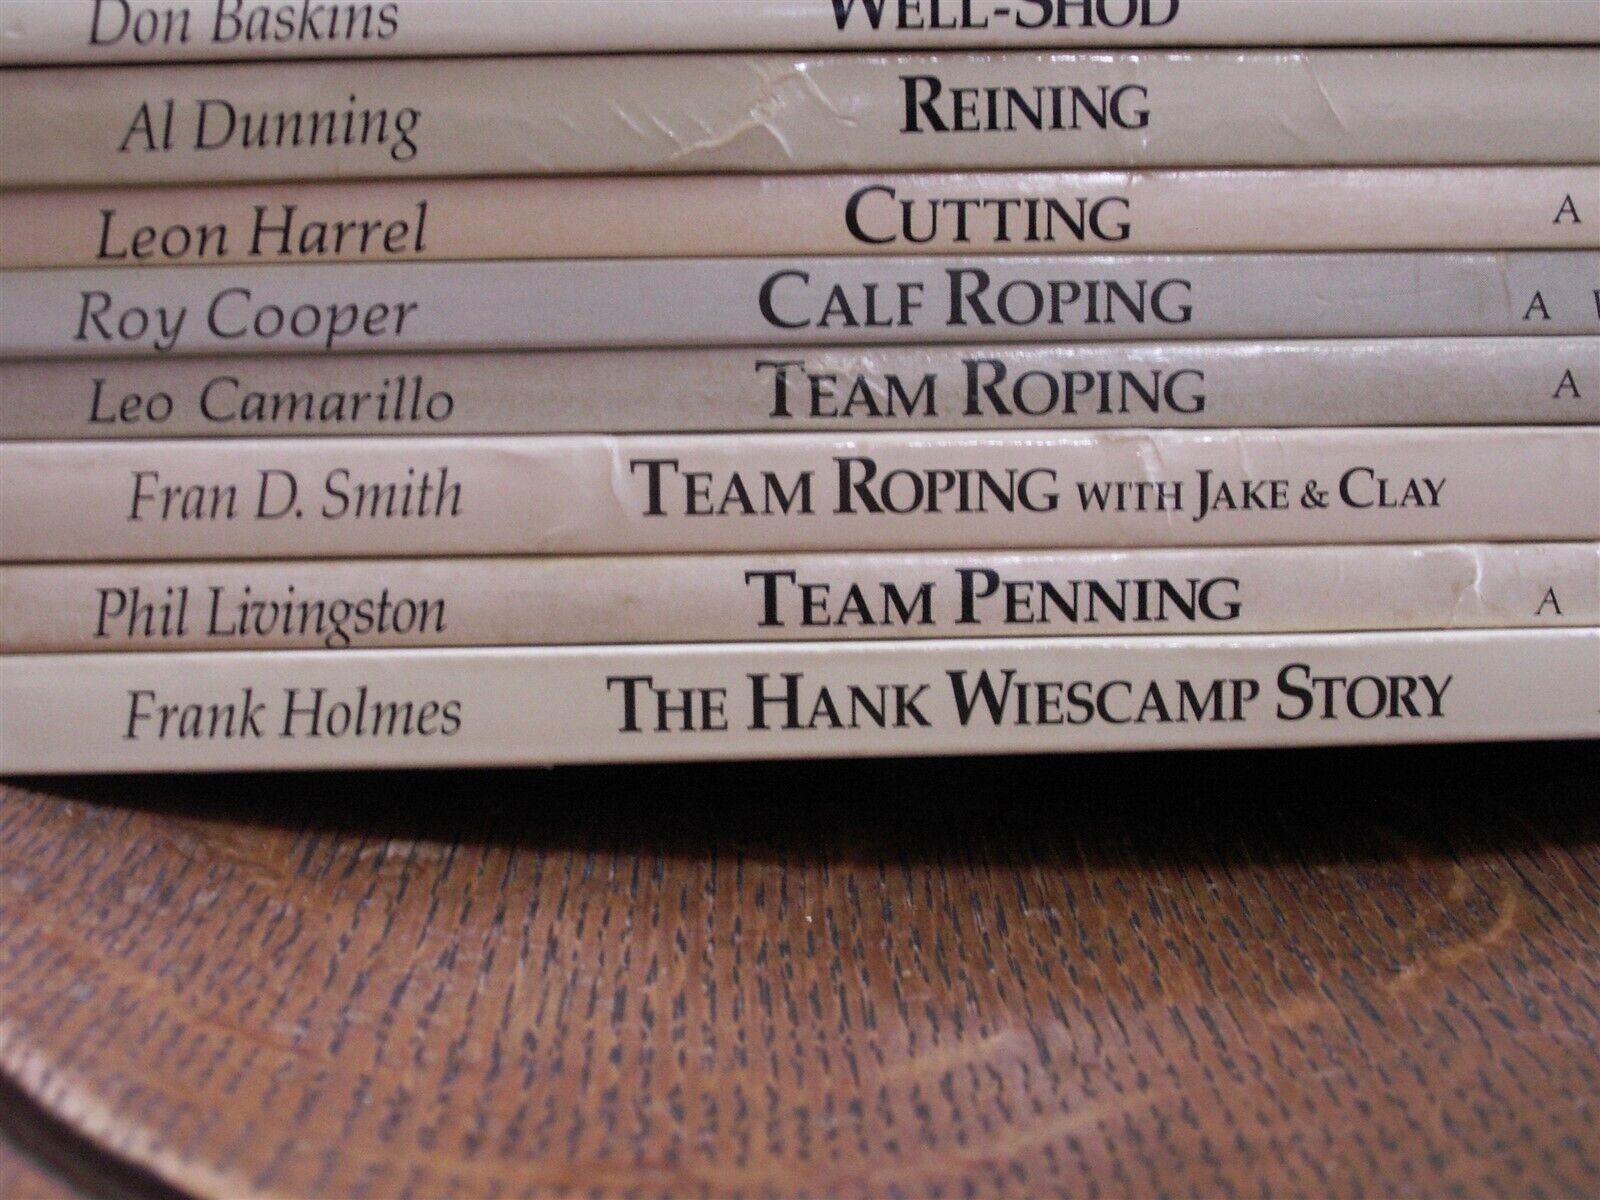 8 Western Horseman books / Reining Calf Roping Team Penning Shoeing 